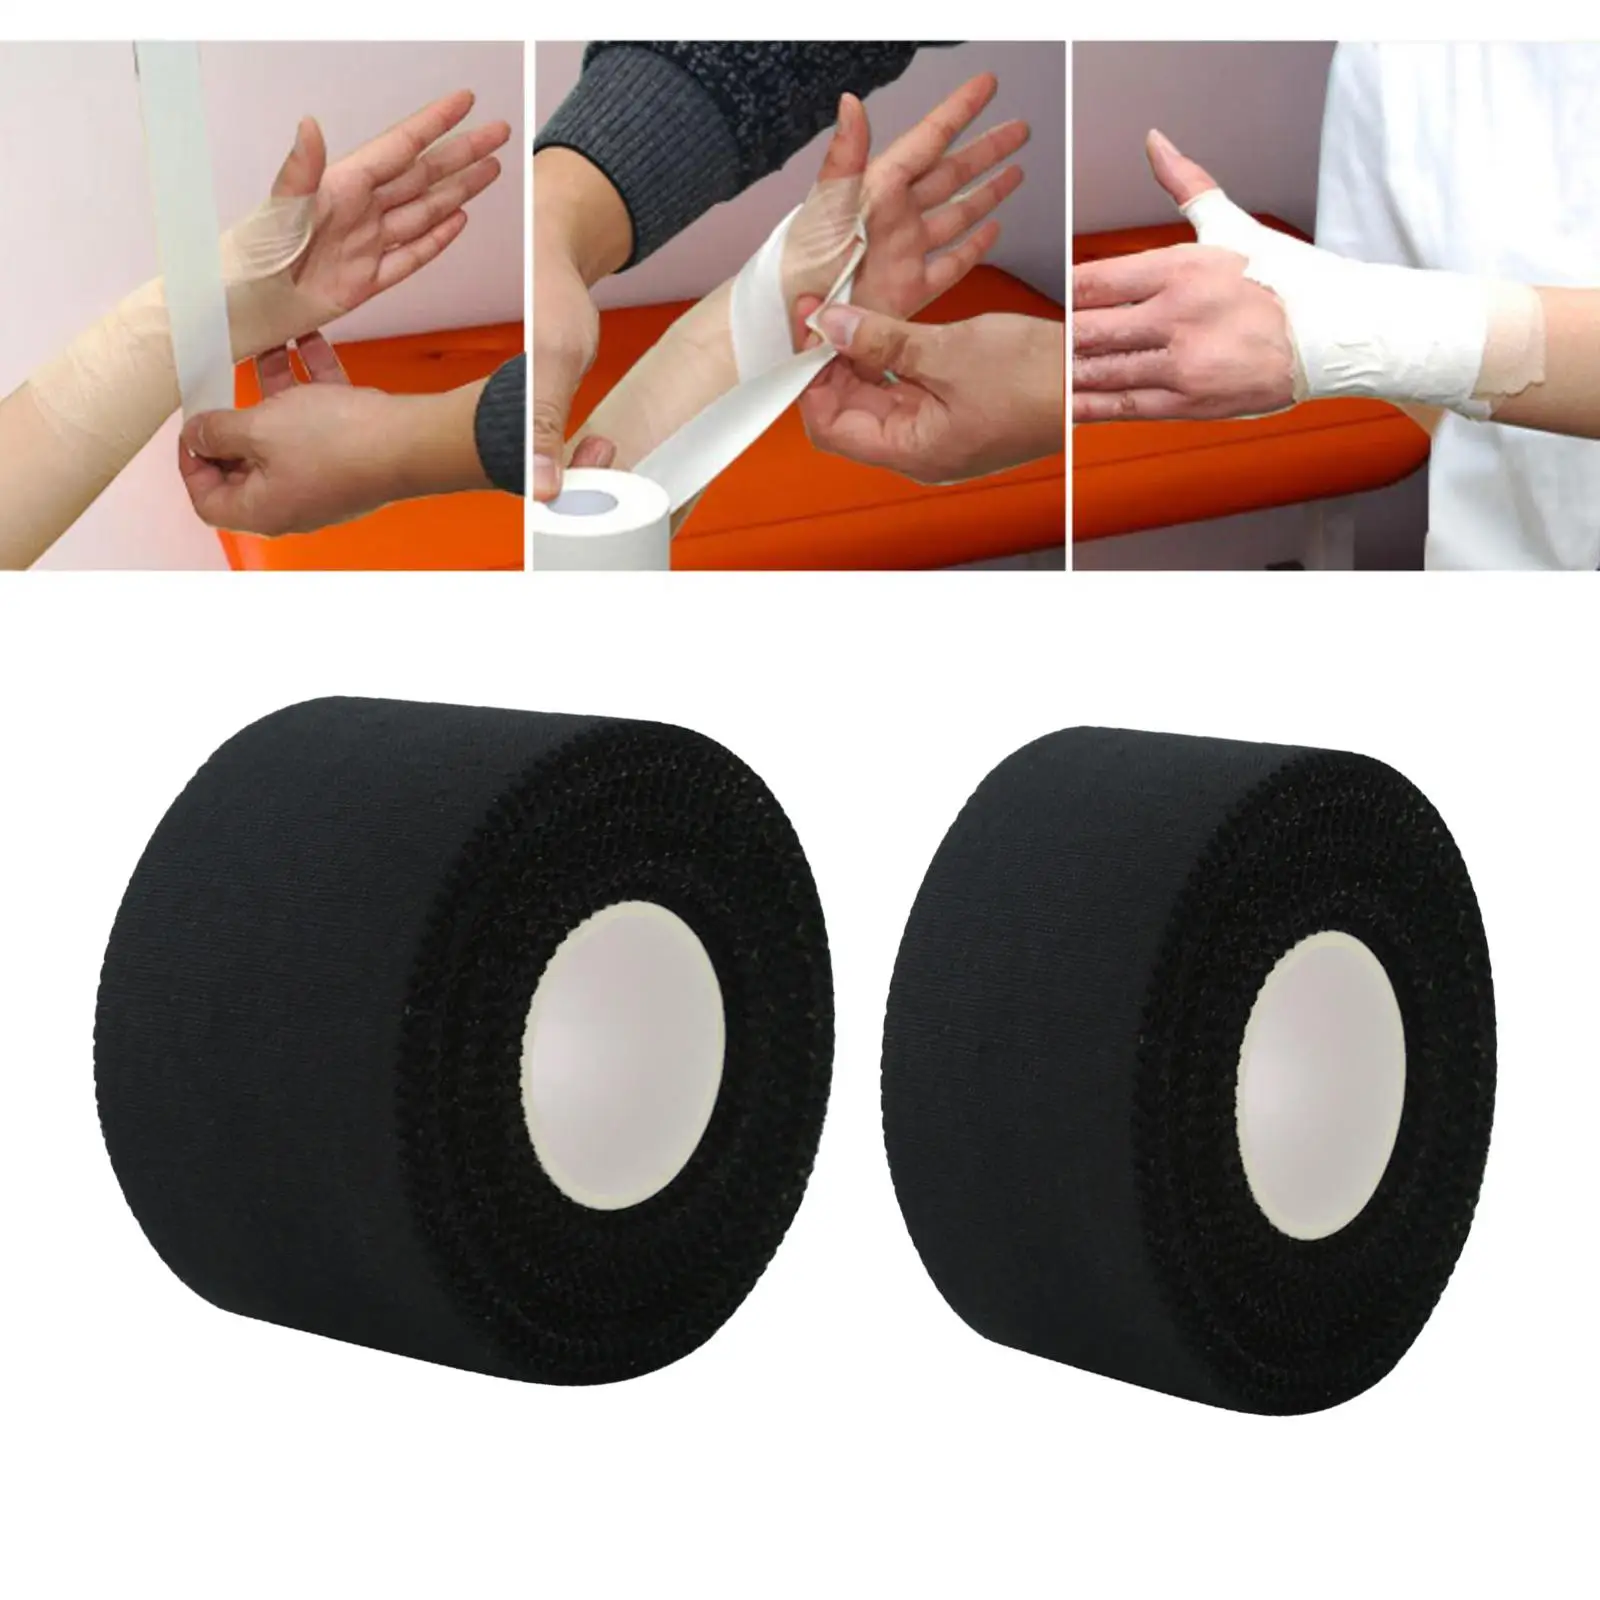 Elastic Cohesive Bandage Sports,Cotton Tape Self Adhesive Wrap for Training Tool Ankle Knee